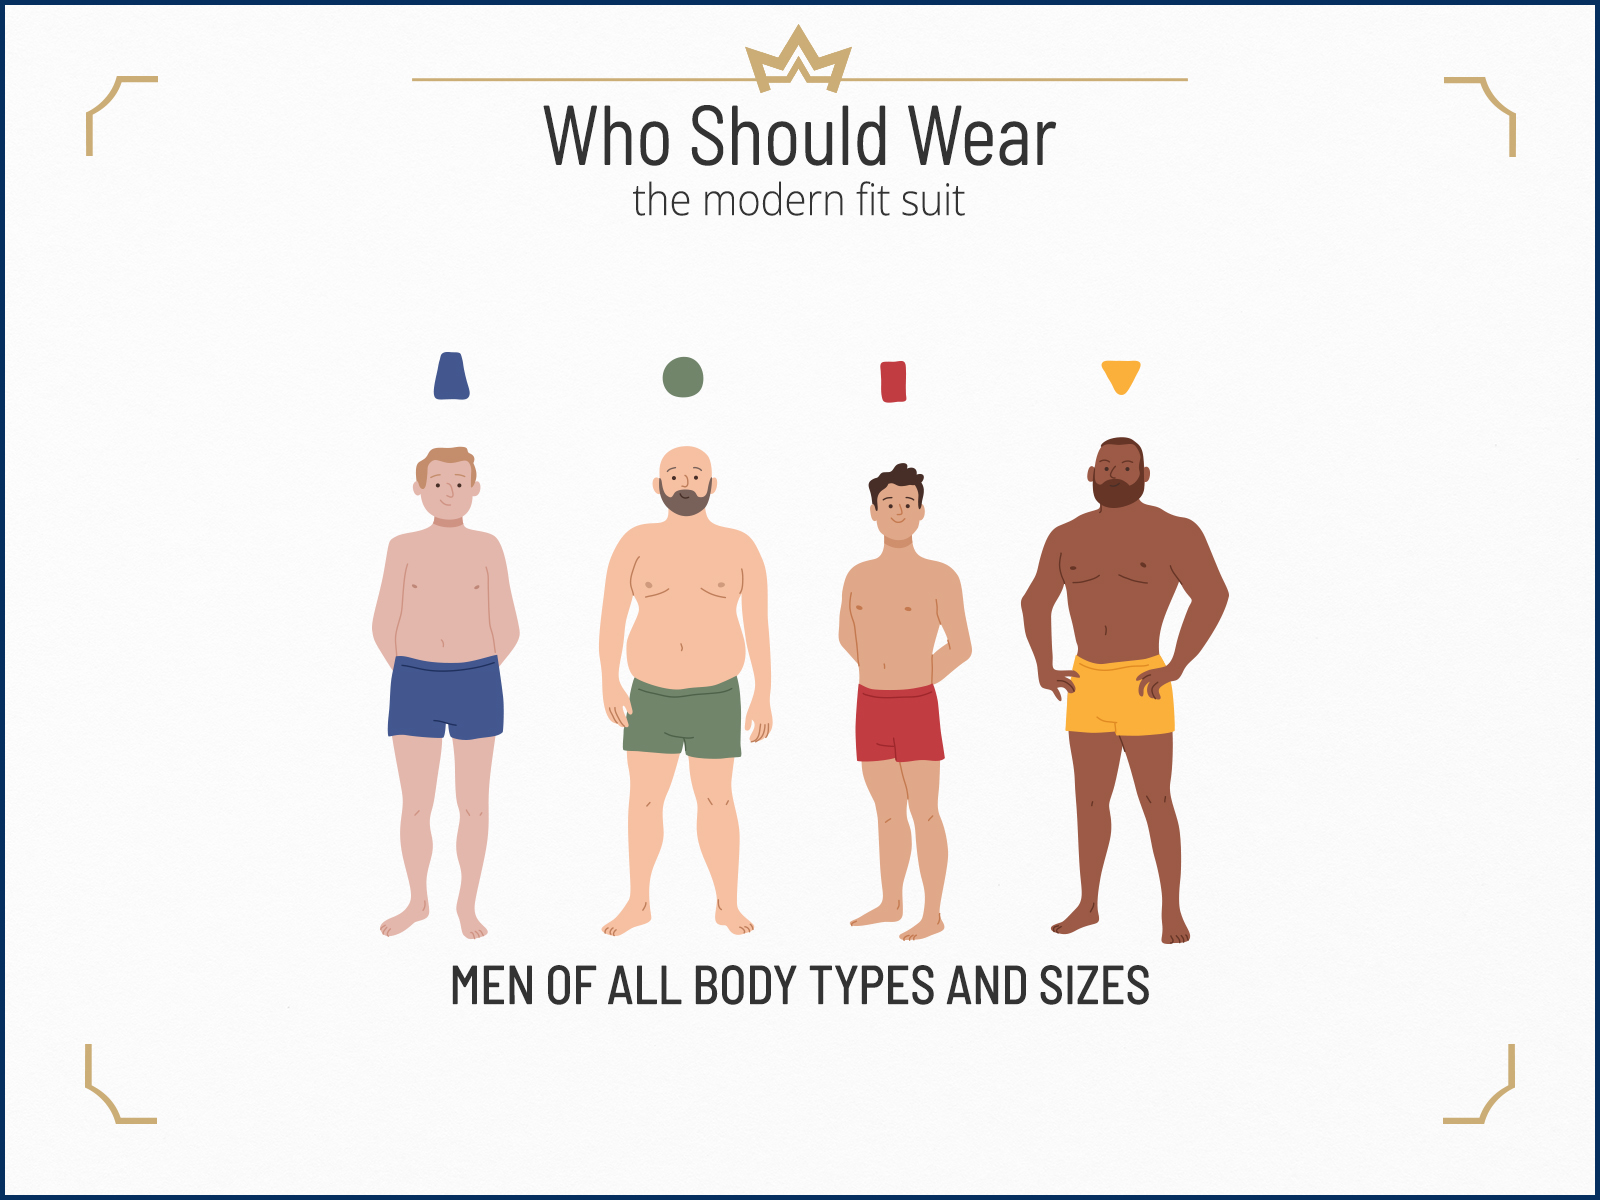 Who should wear a modern-fit suit